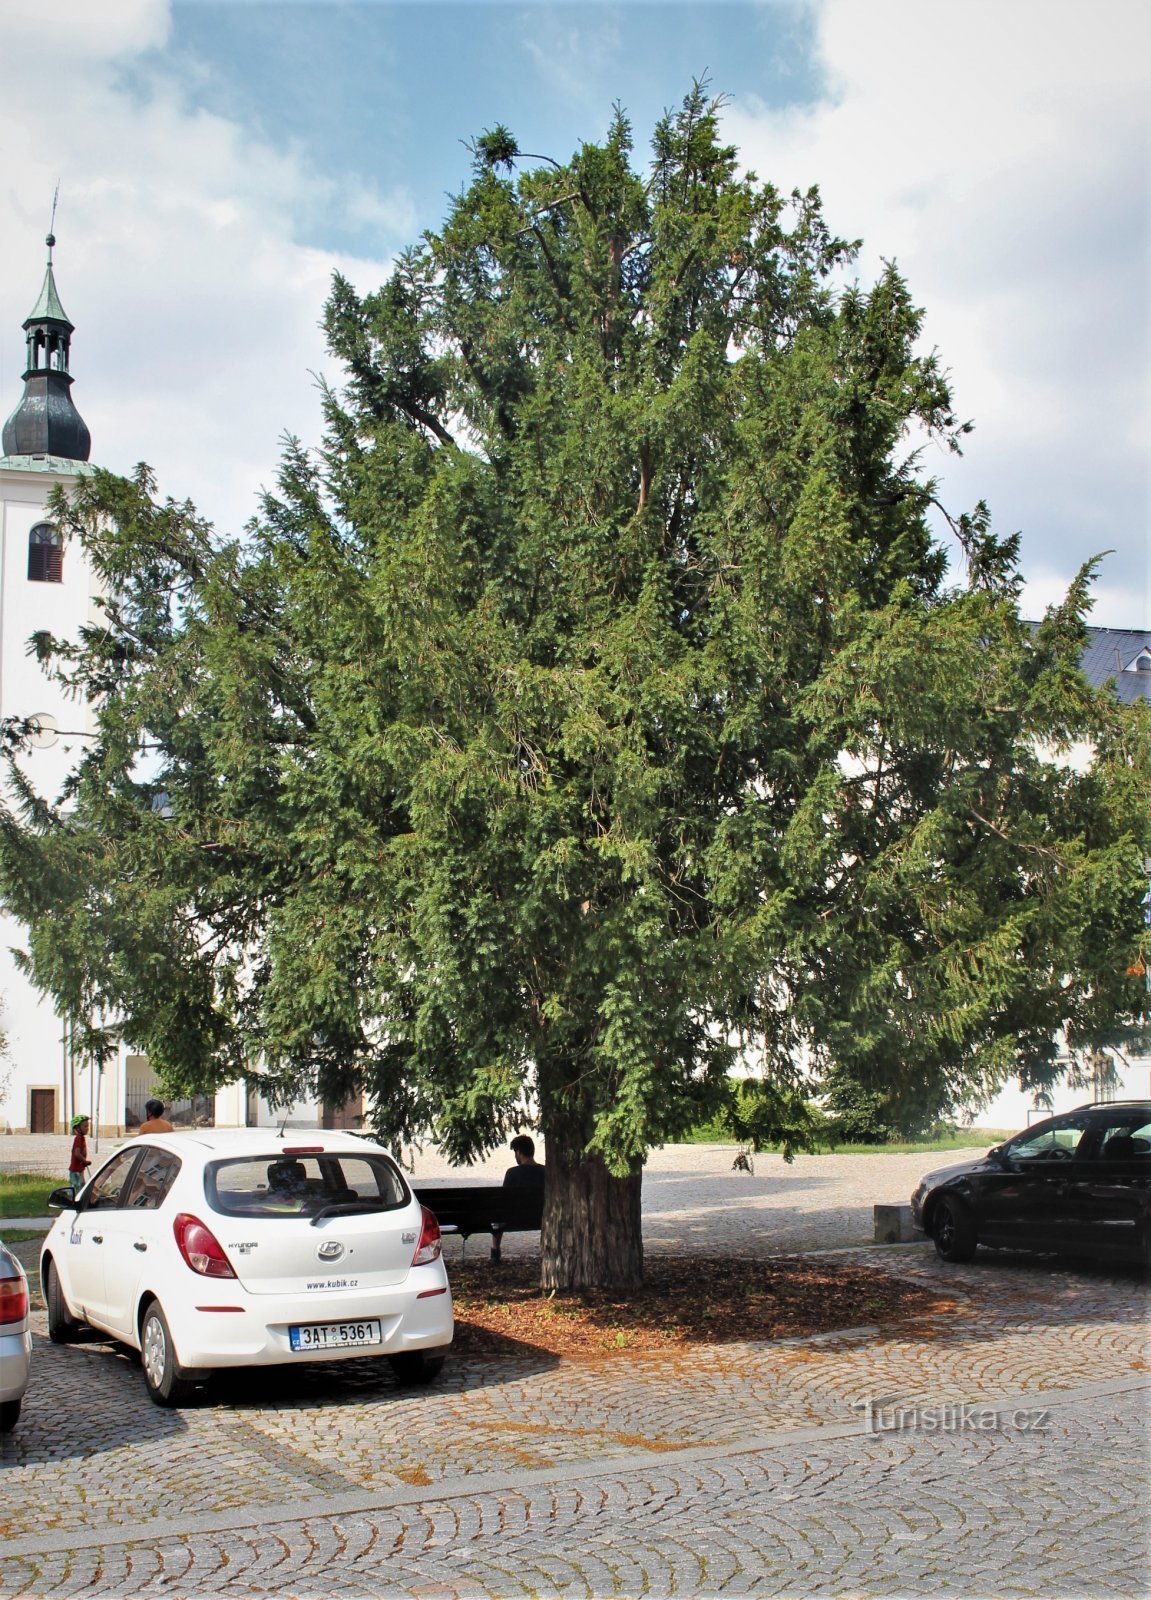 Lanškroun - un copac important din piața Aloise Jirásk